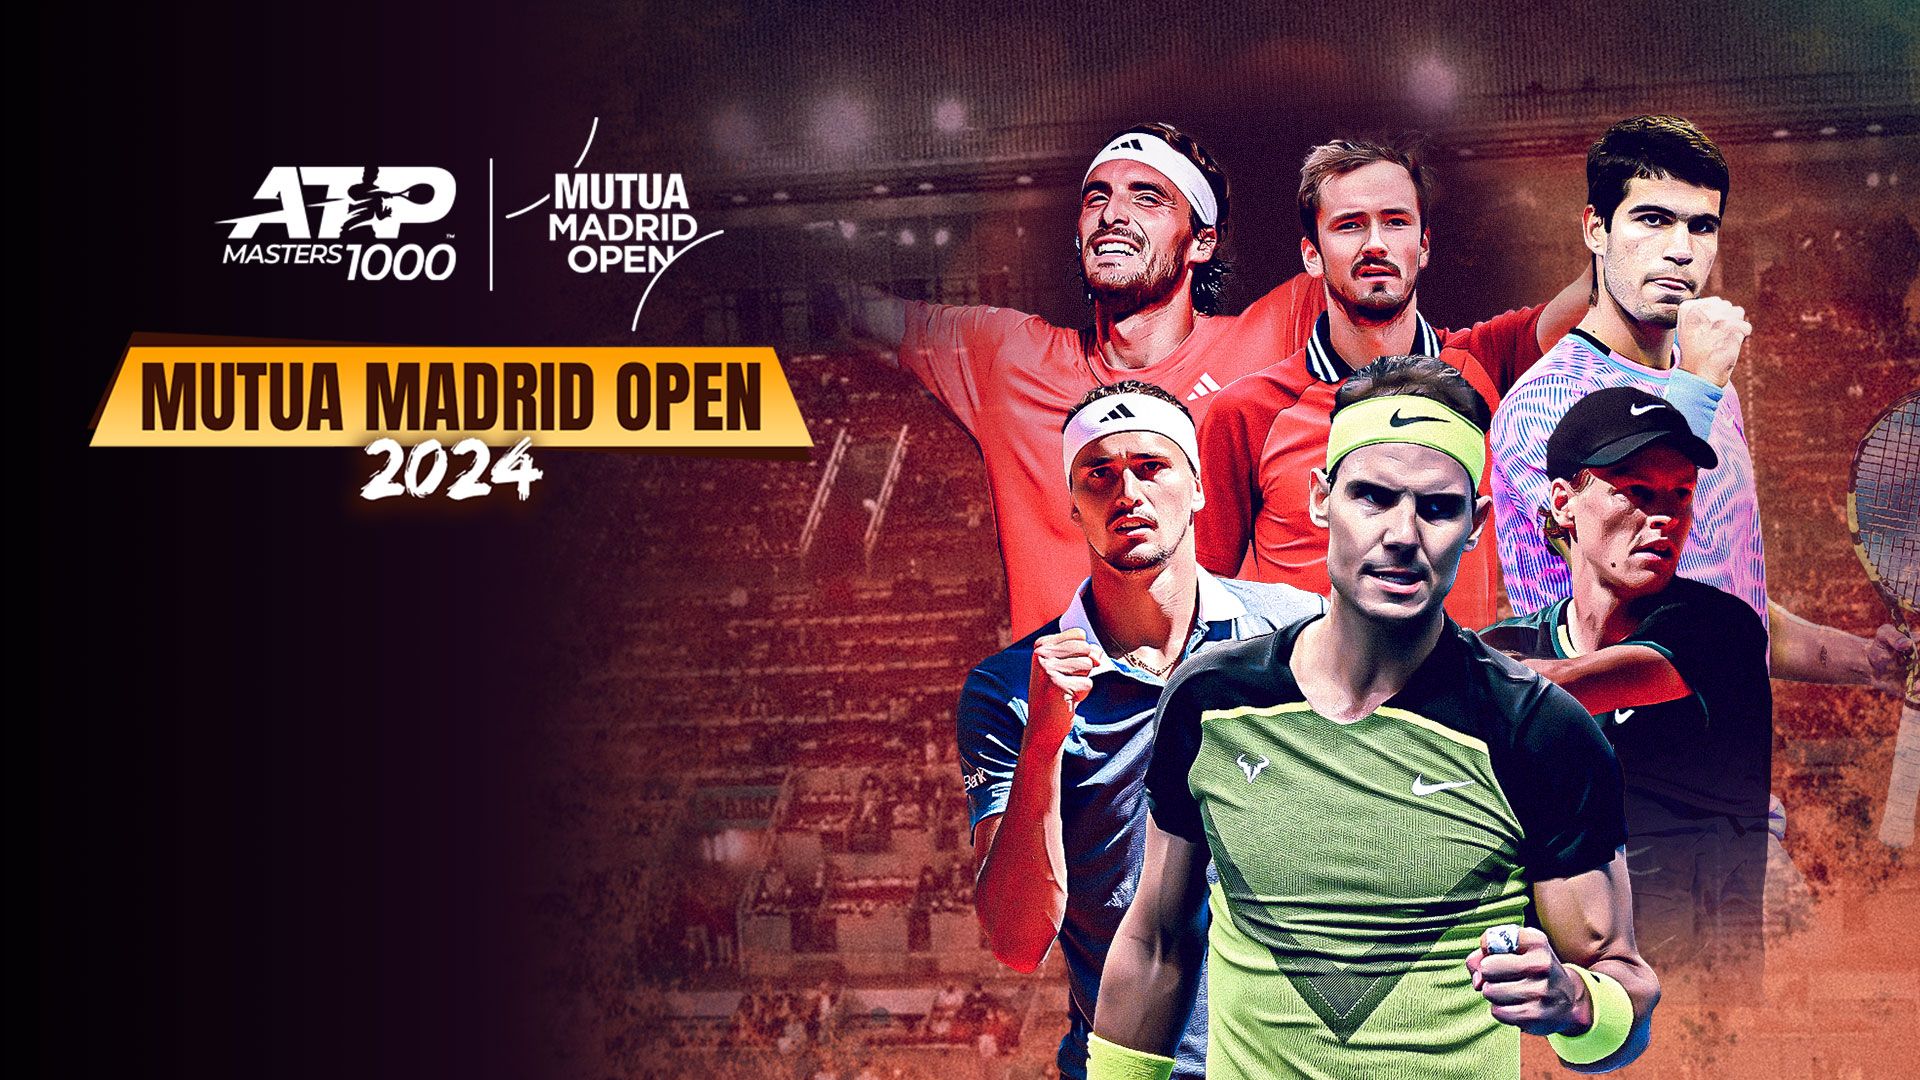 ATP Masters 1000 - Mutua Madrid Open 2024